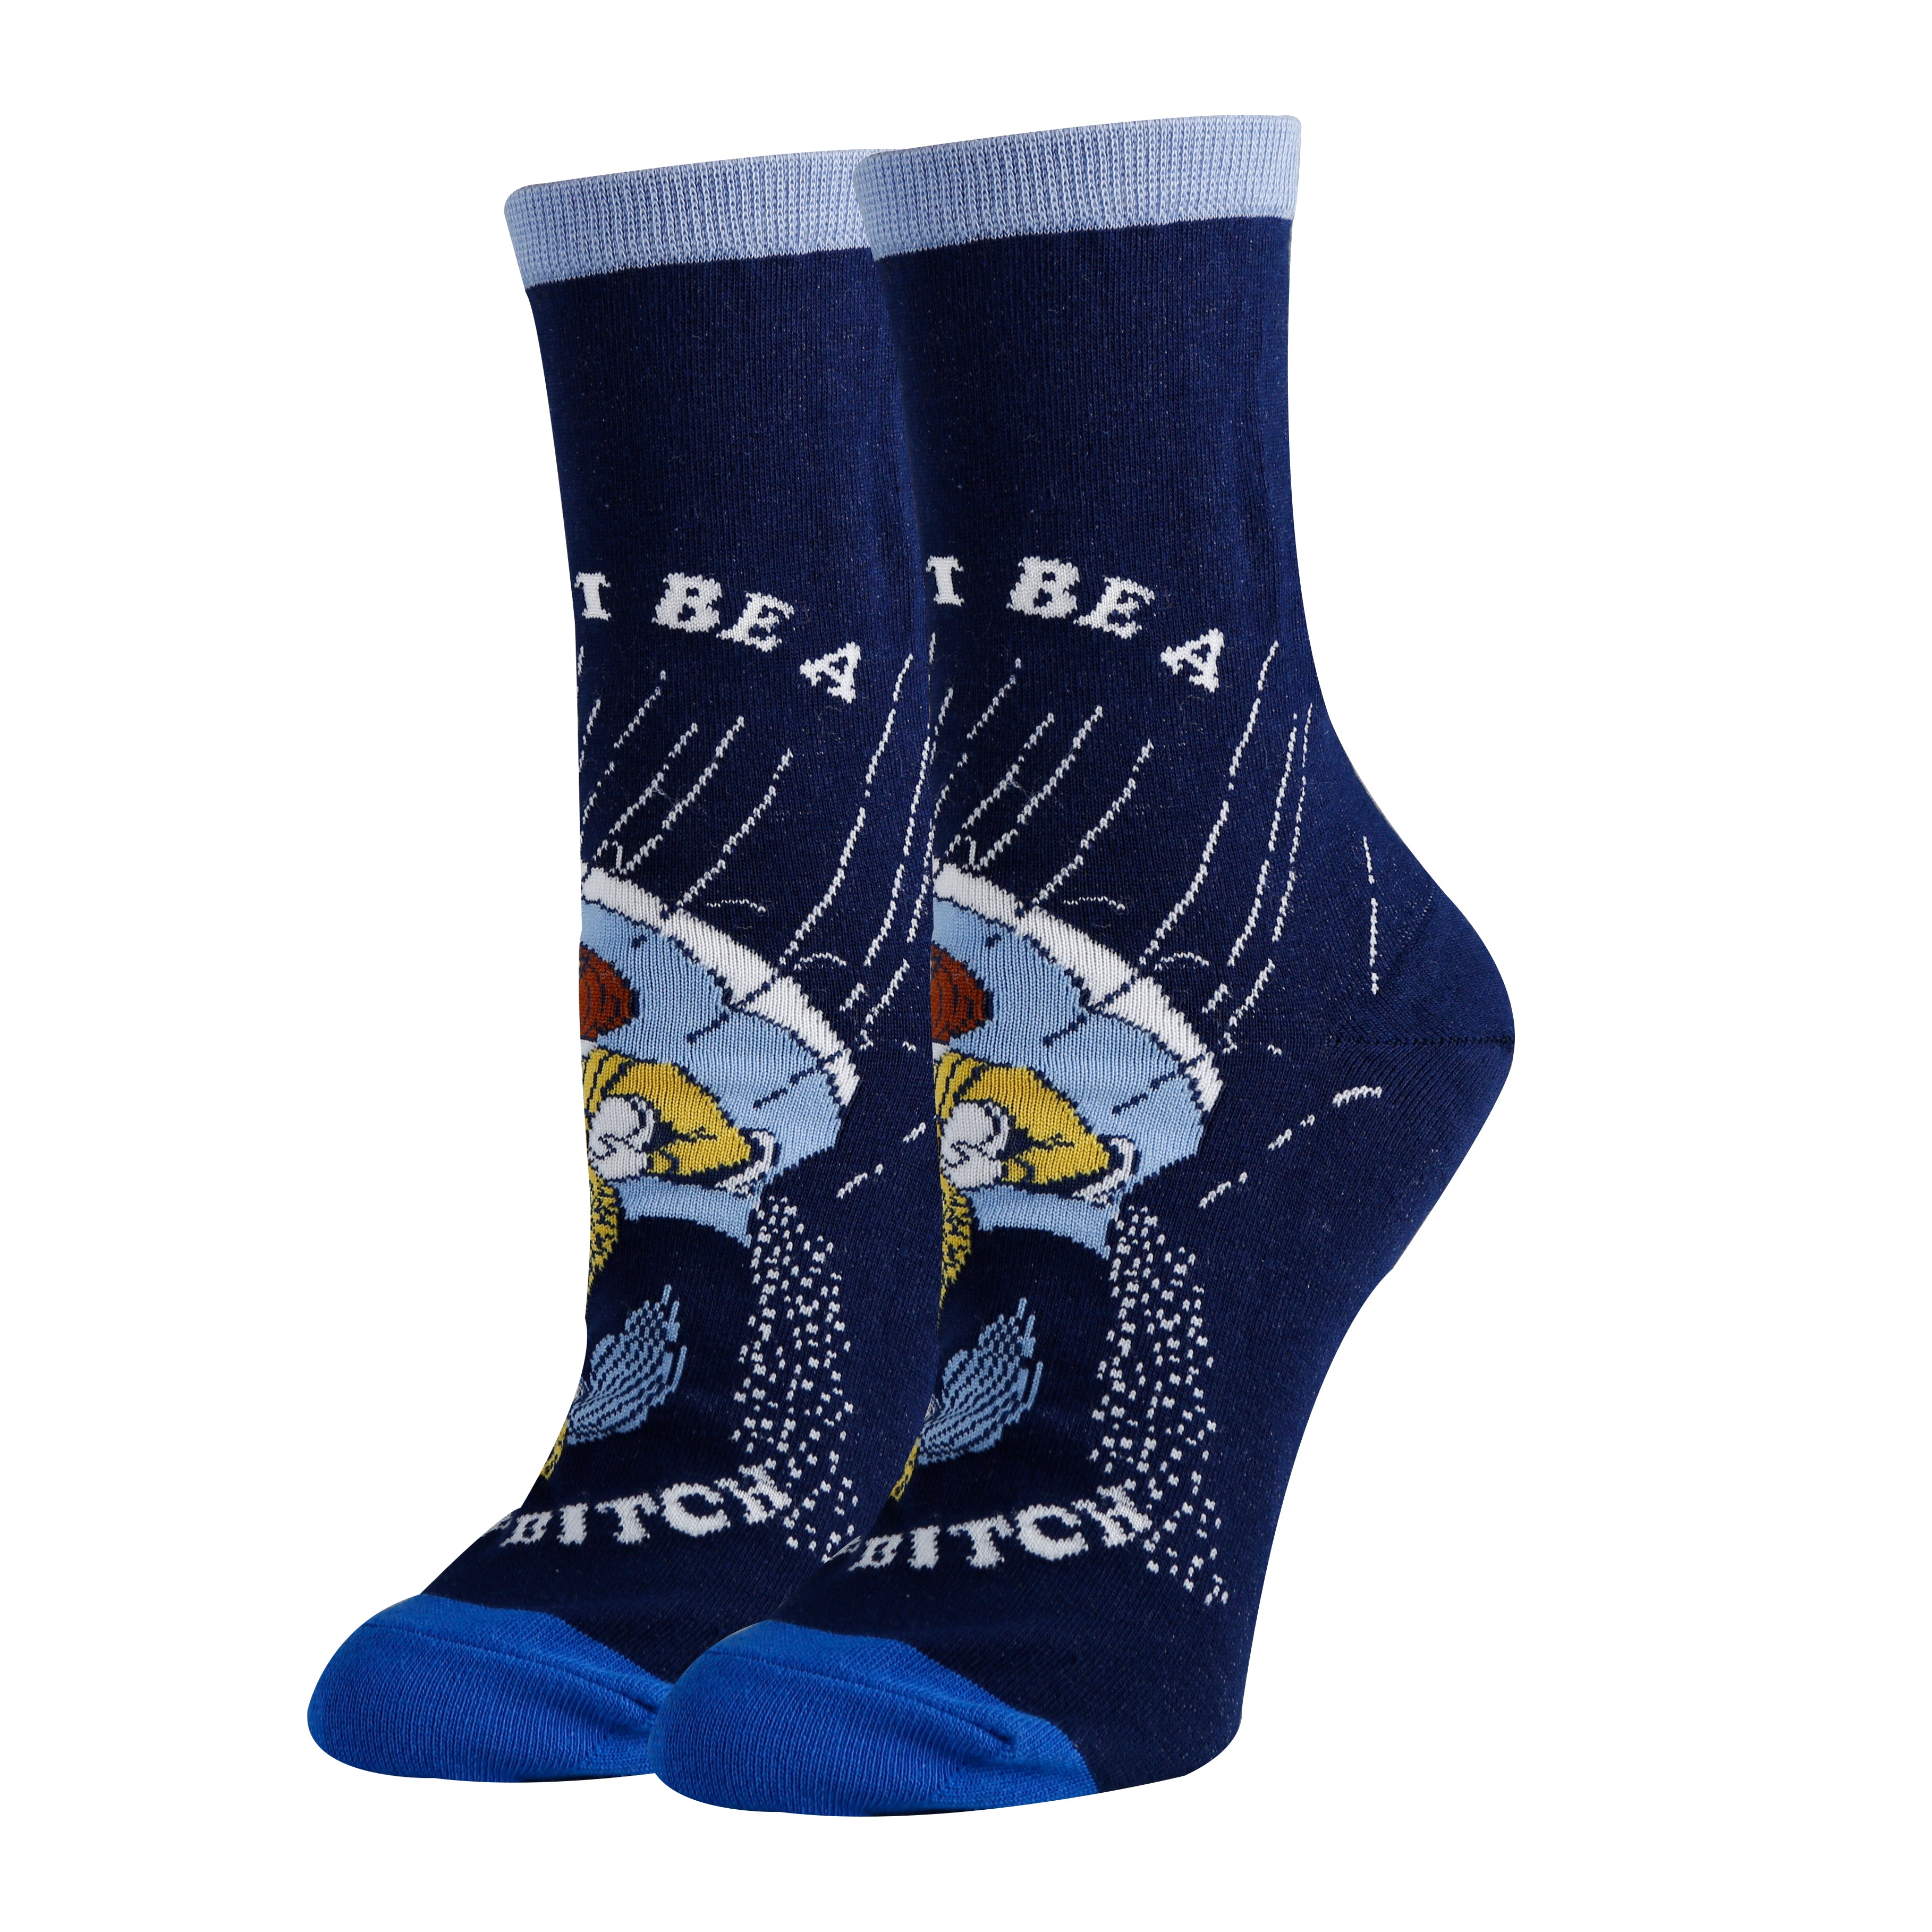 Salty Bitch Socks | Novelty Crew Socks For Women